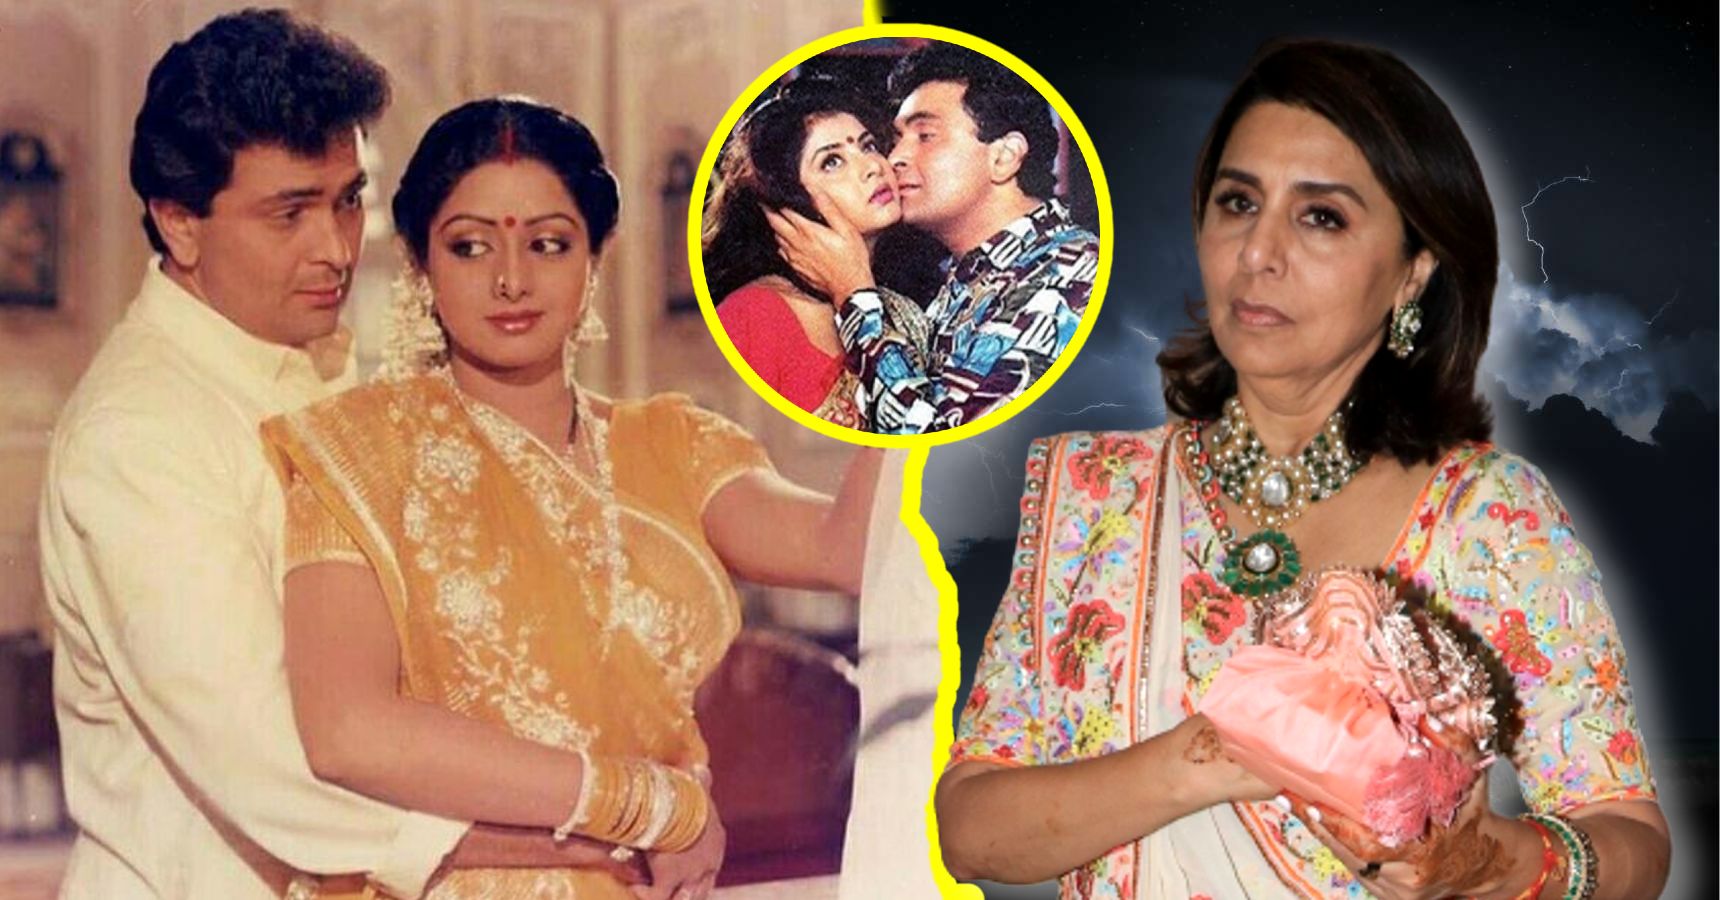 Neetu Kapoor opened up about husband Rishi Kapoor’s extra marital affairs